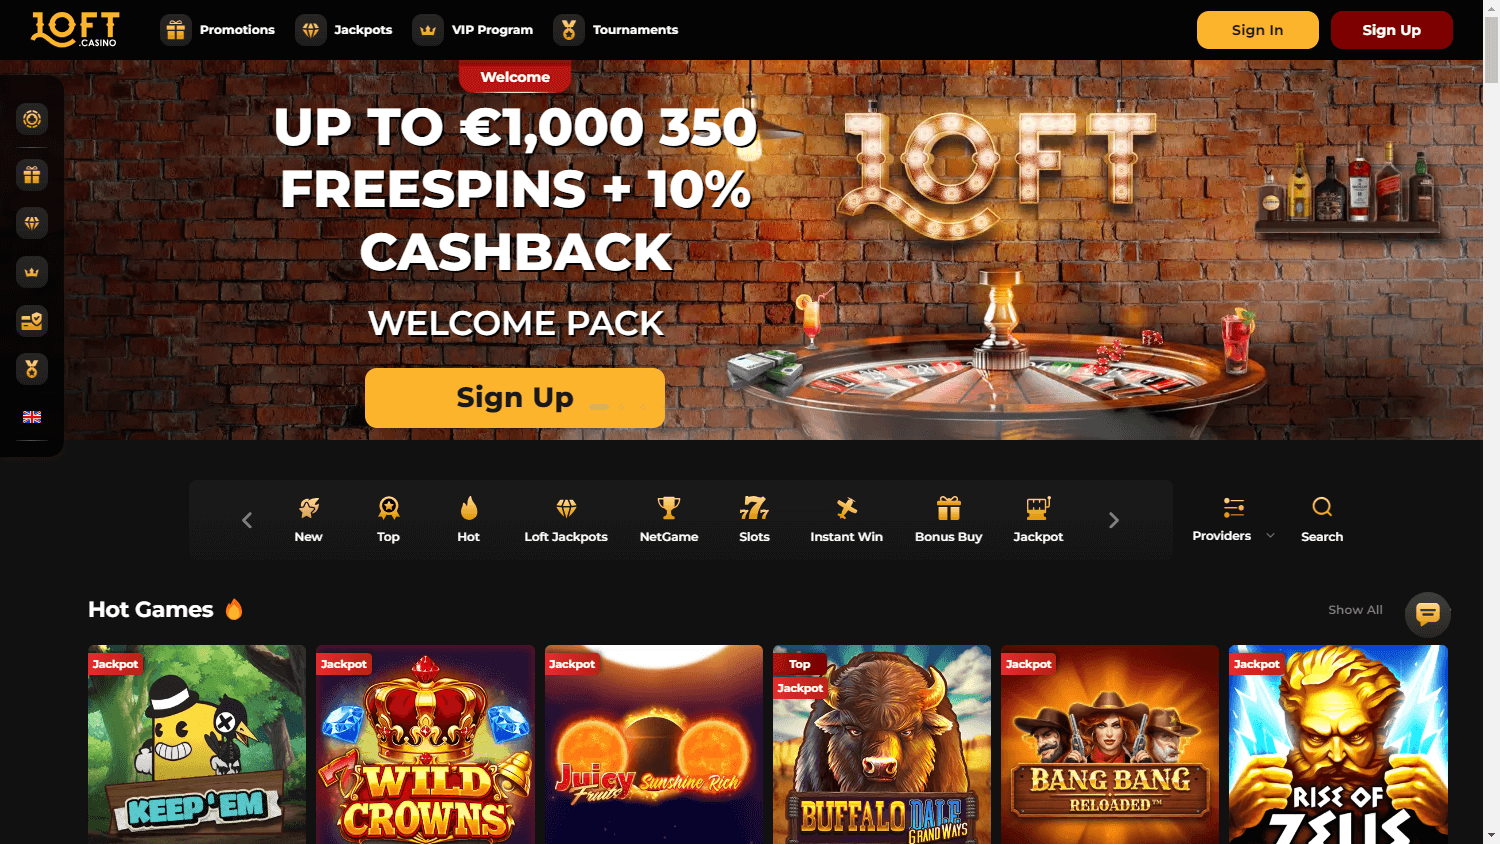 loft_casino_homepage_desktop